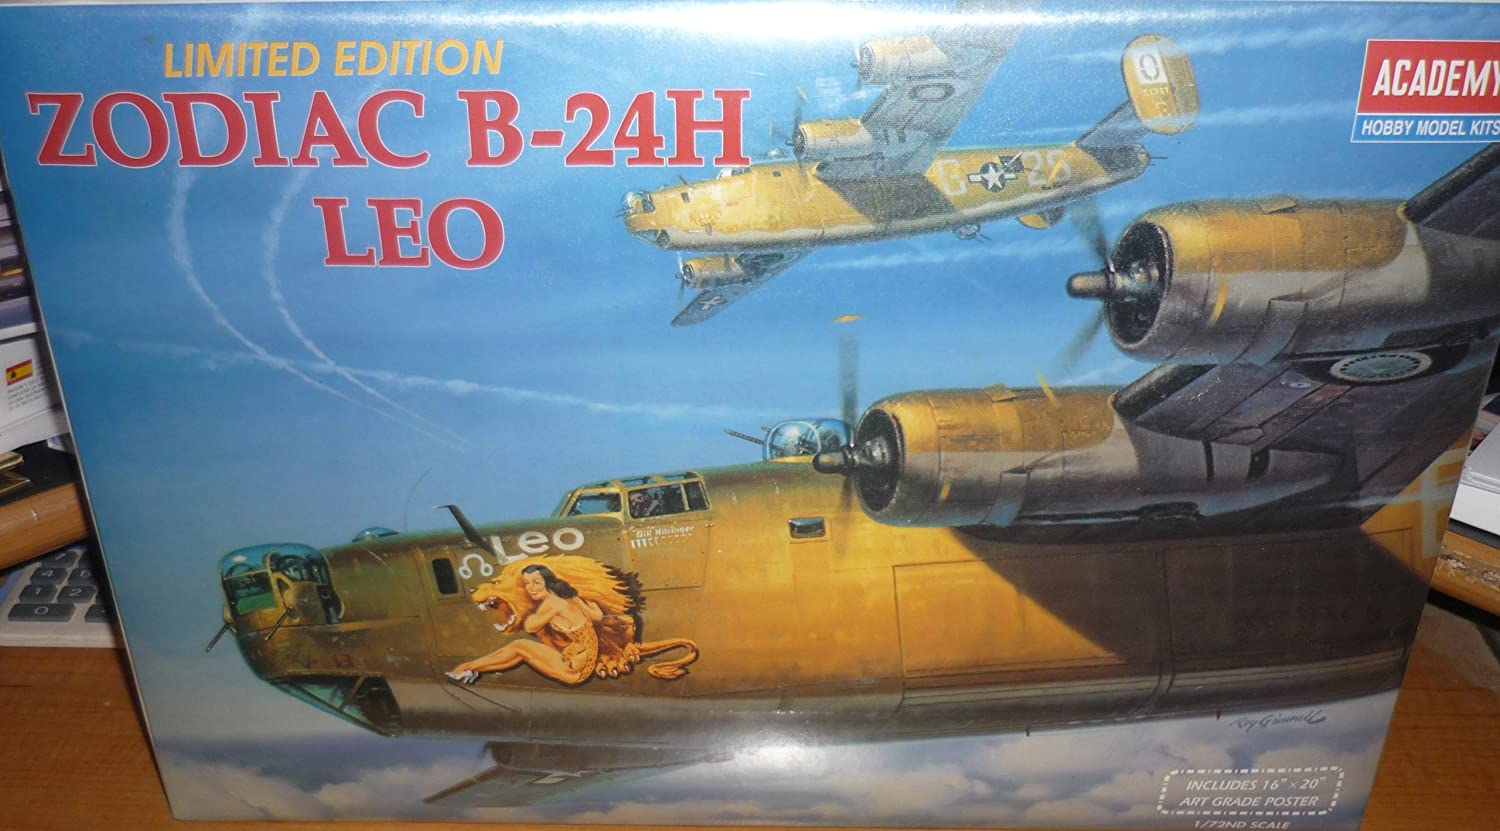 ACADEMY 1/72　LIMITED EDITION ZODIAC B-24H LEO